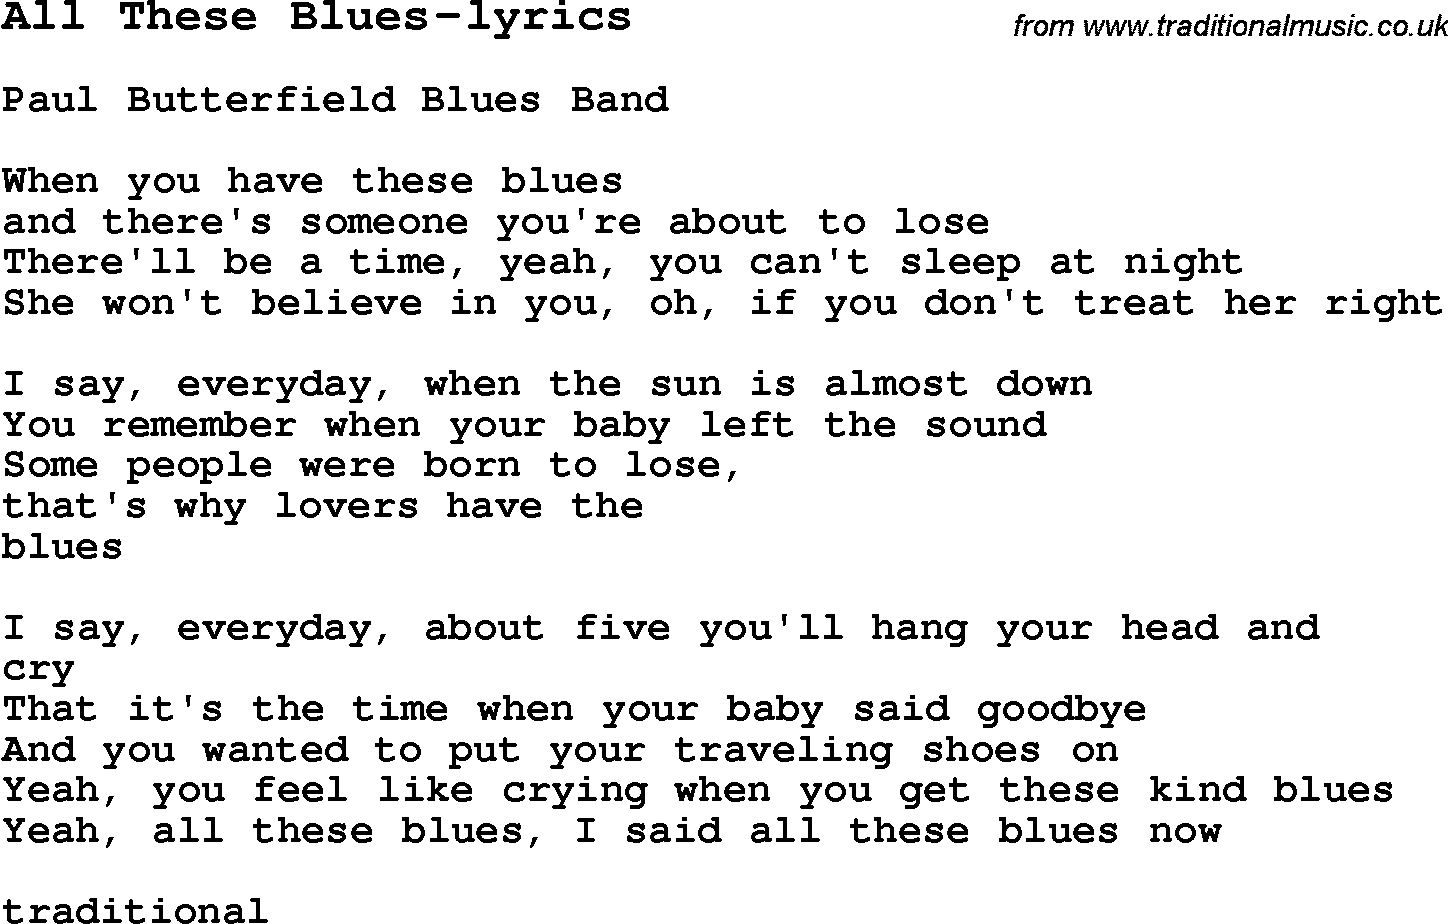 "Lyrics" - Hair Electric Blues - wide 2